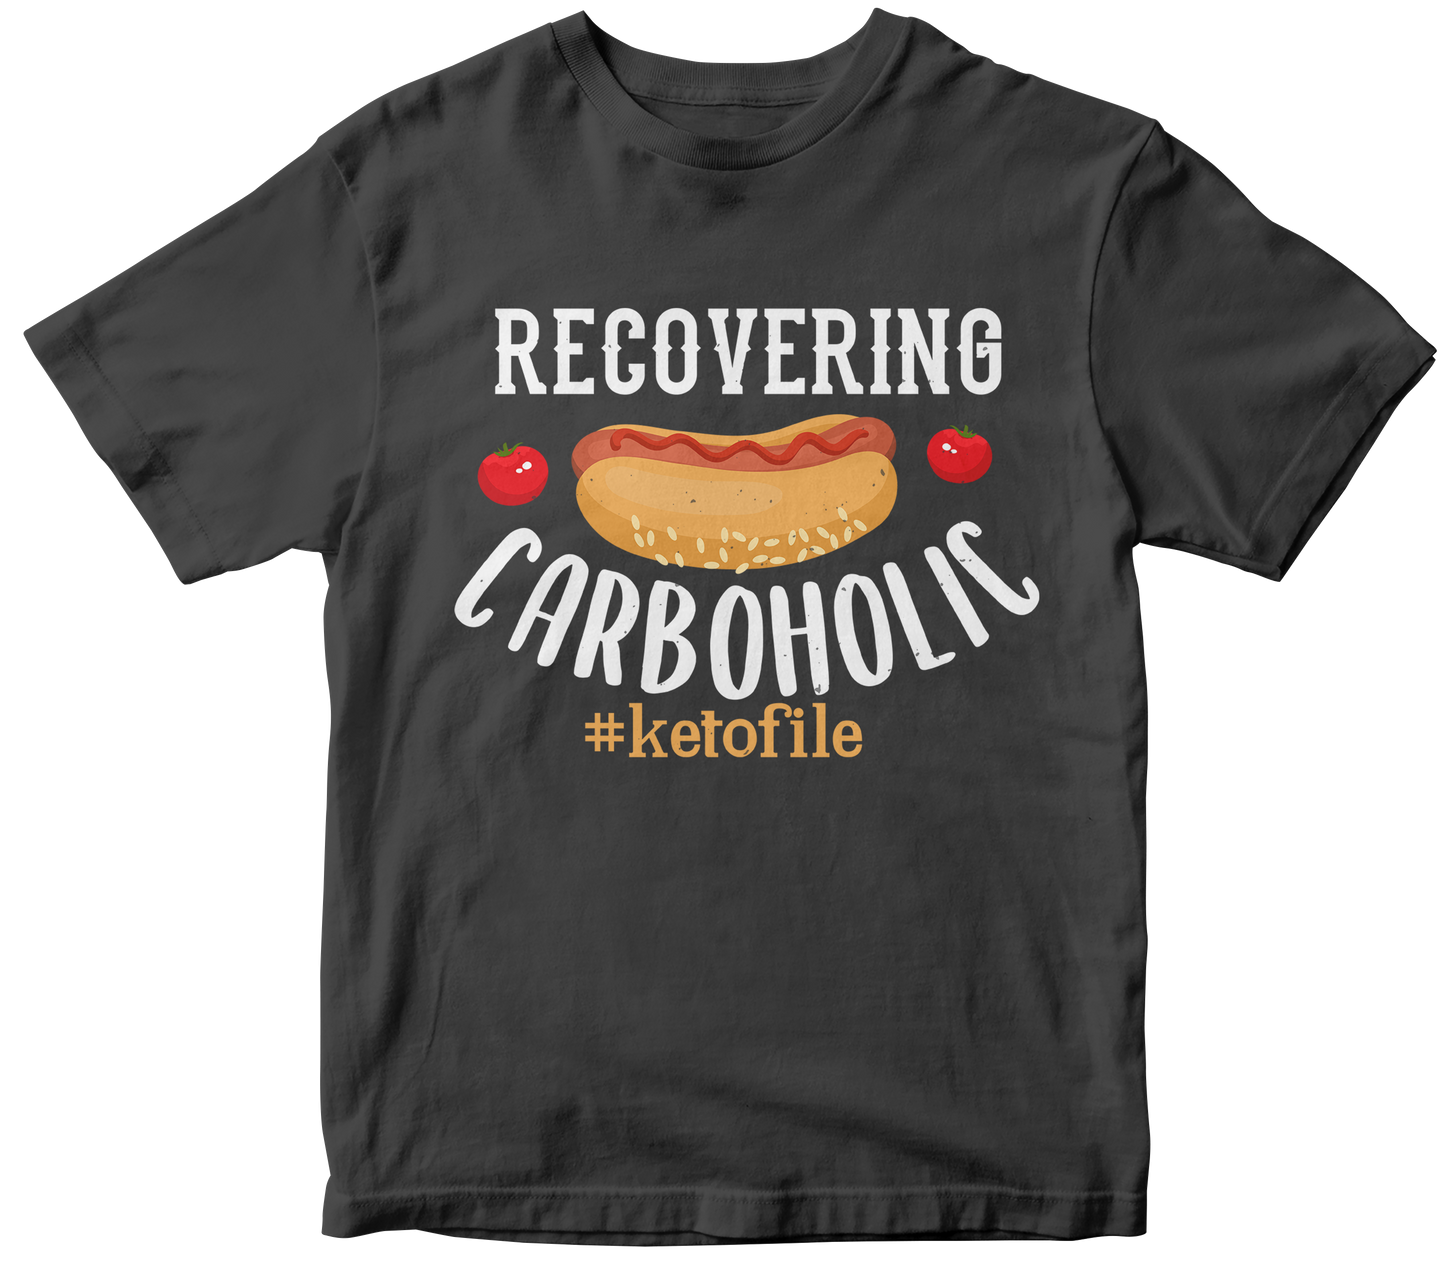 Recovering Carboholic Ketofile